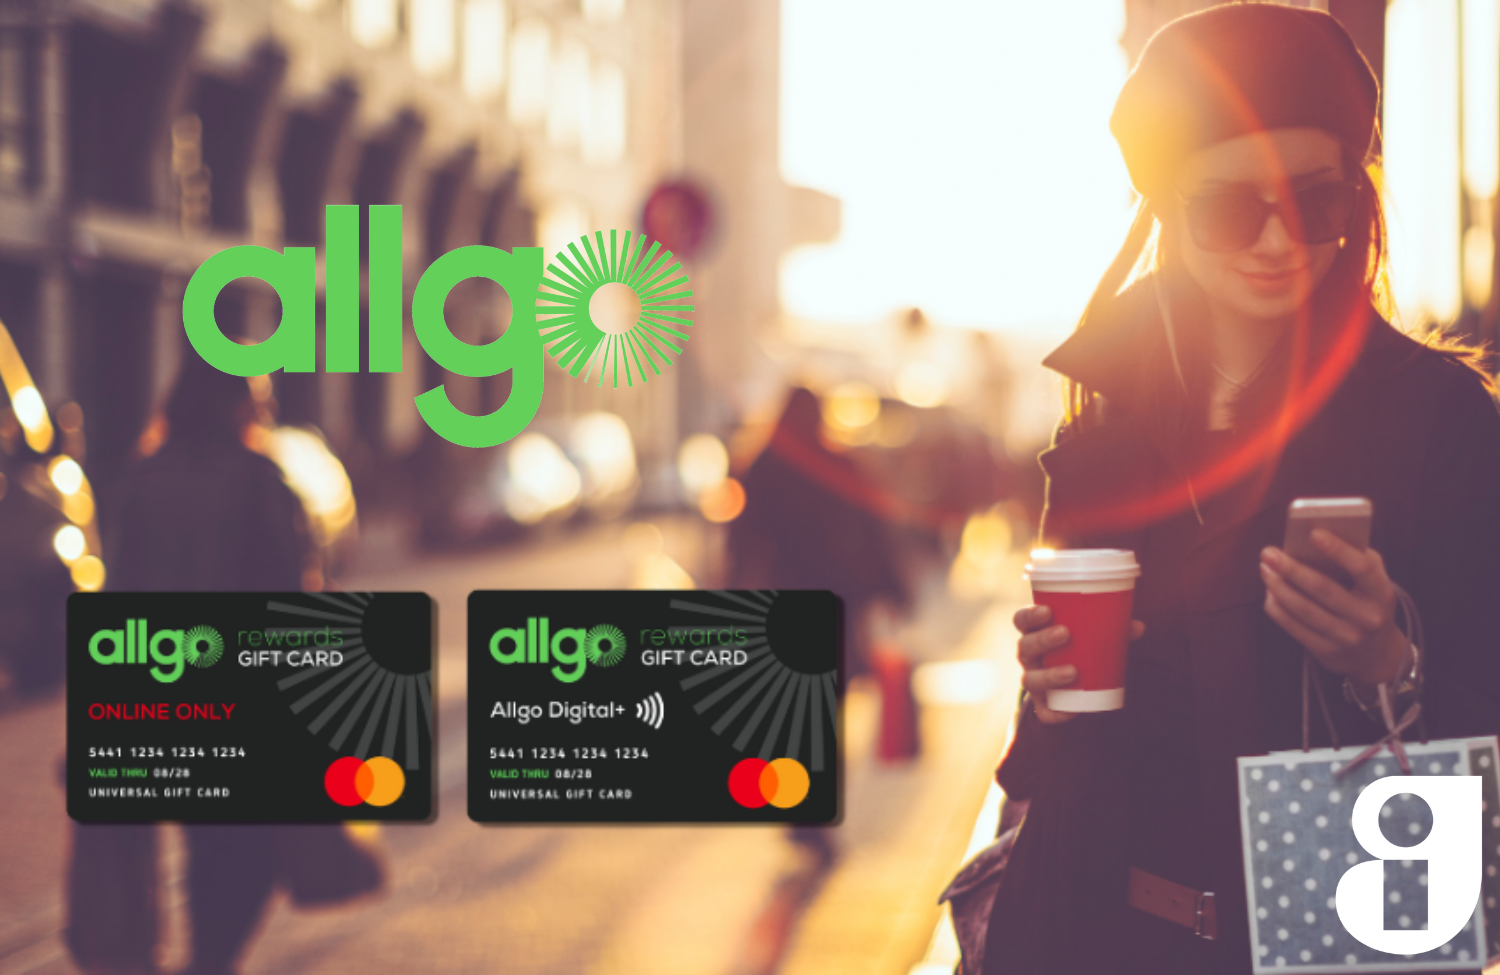 Guaranteed Irish Member Allgo launches sustainable new Digital Gift Card